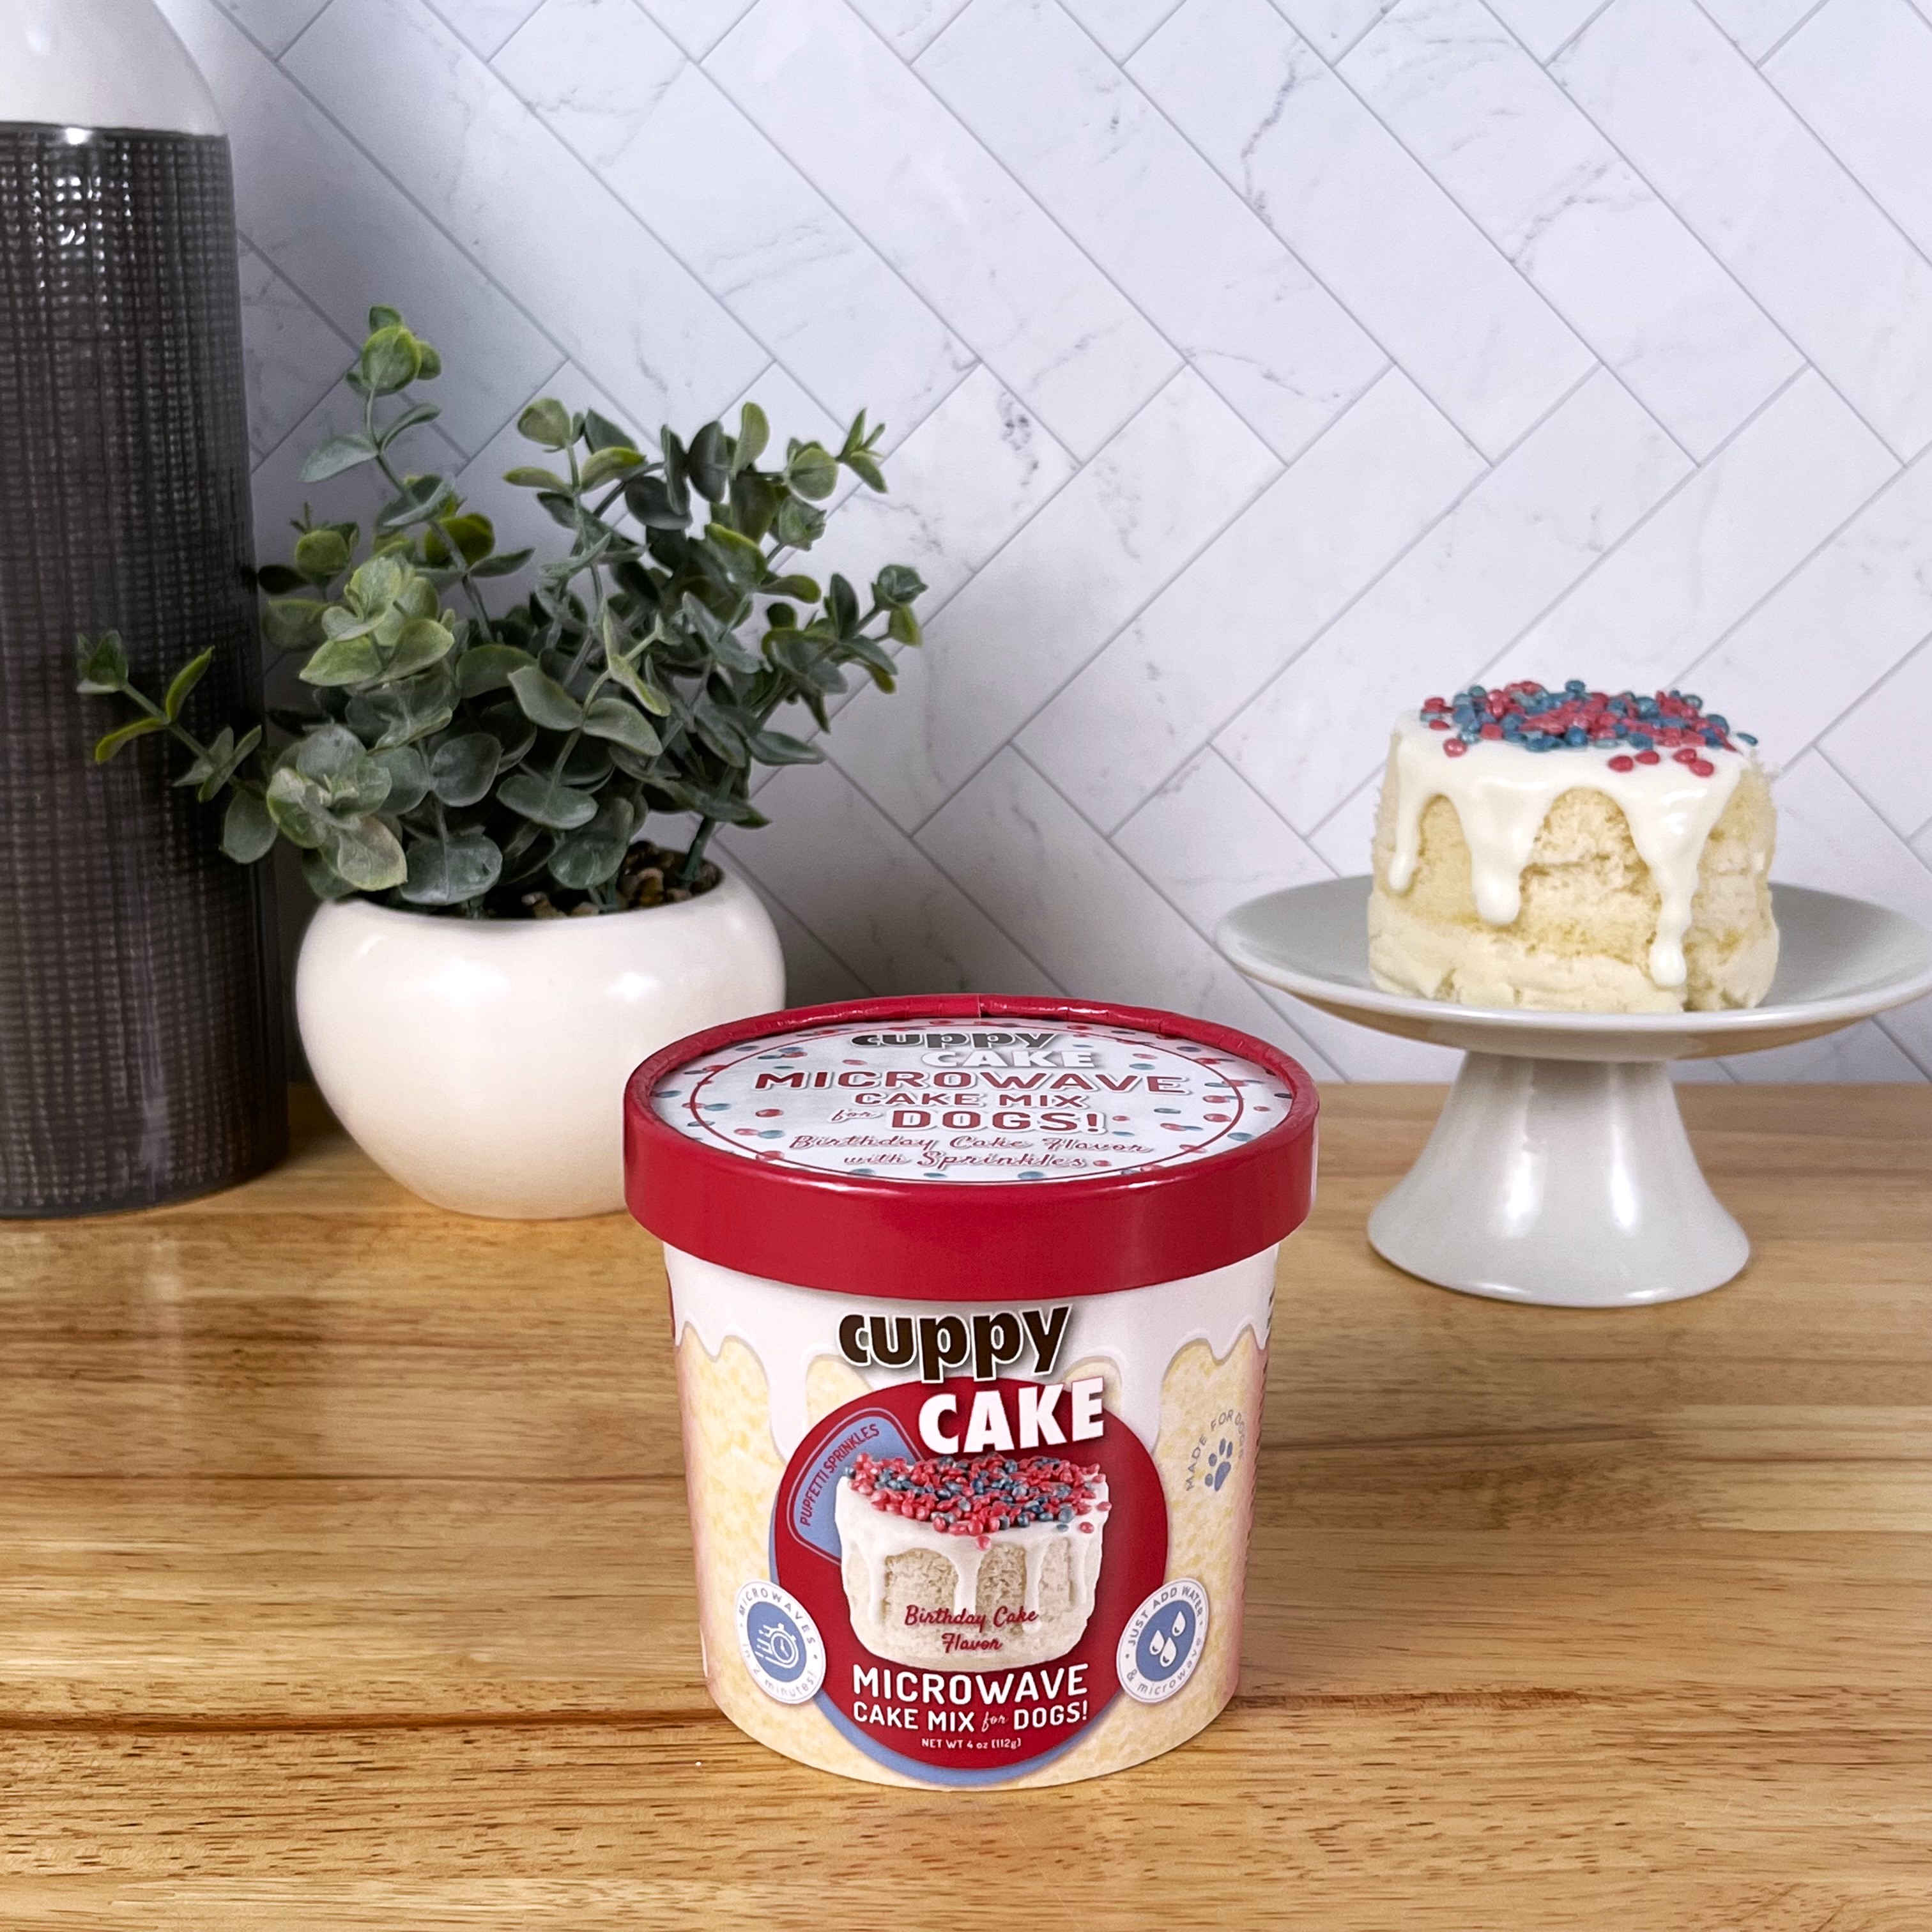 Microwave Cupcake | eCurry - The Recipe Blog